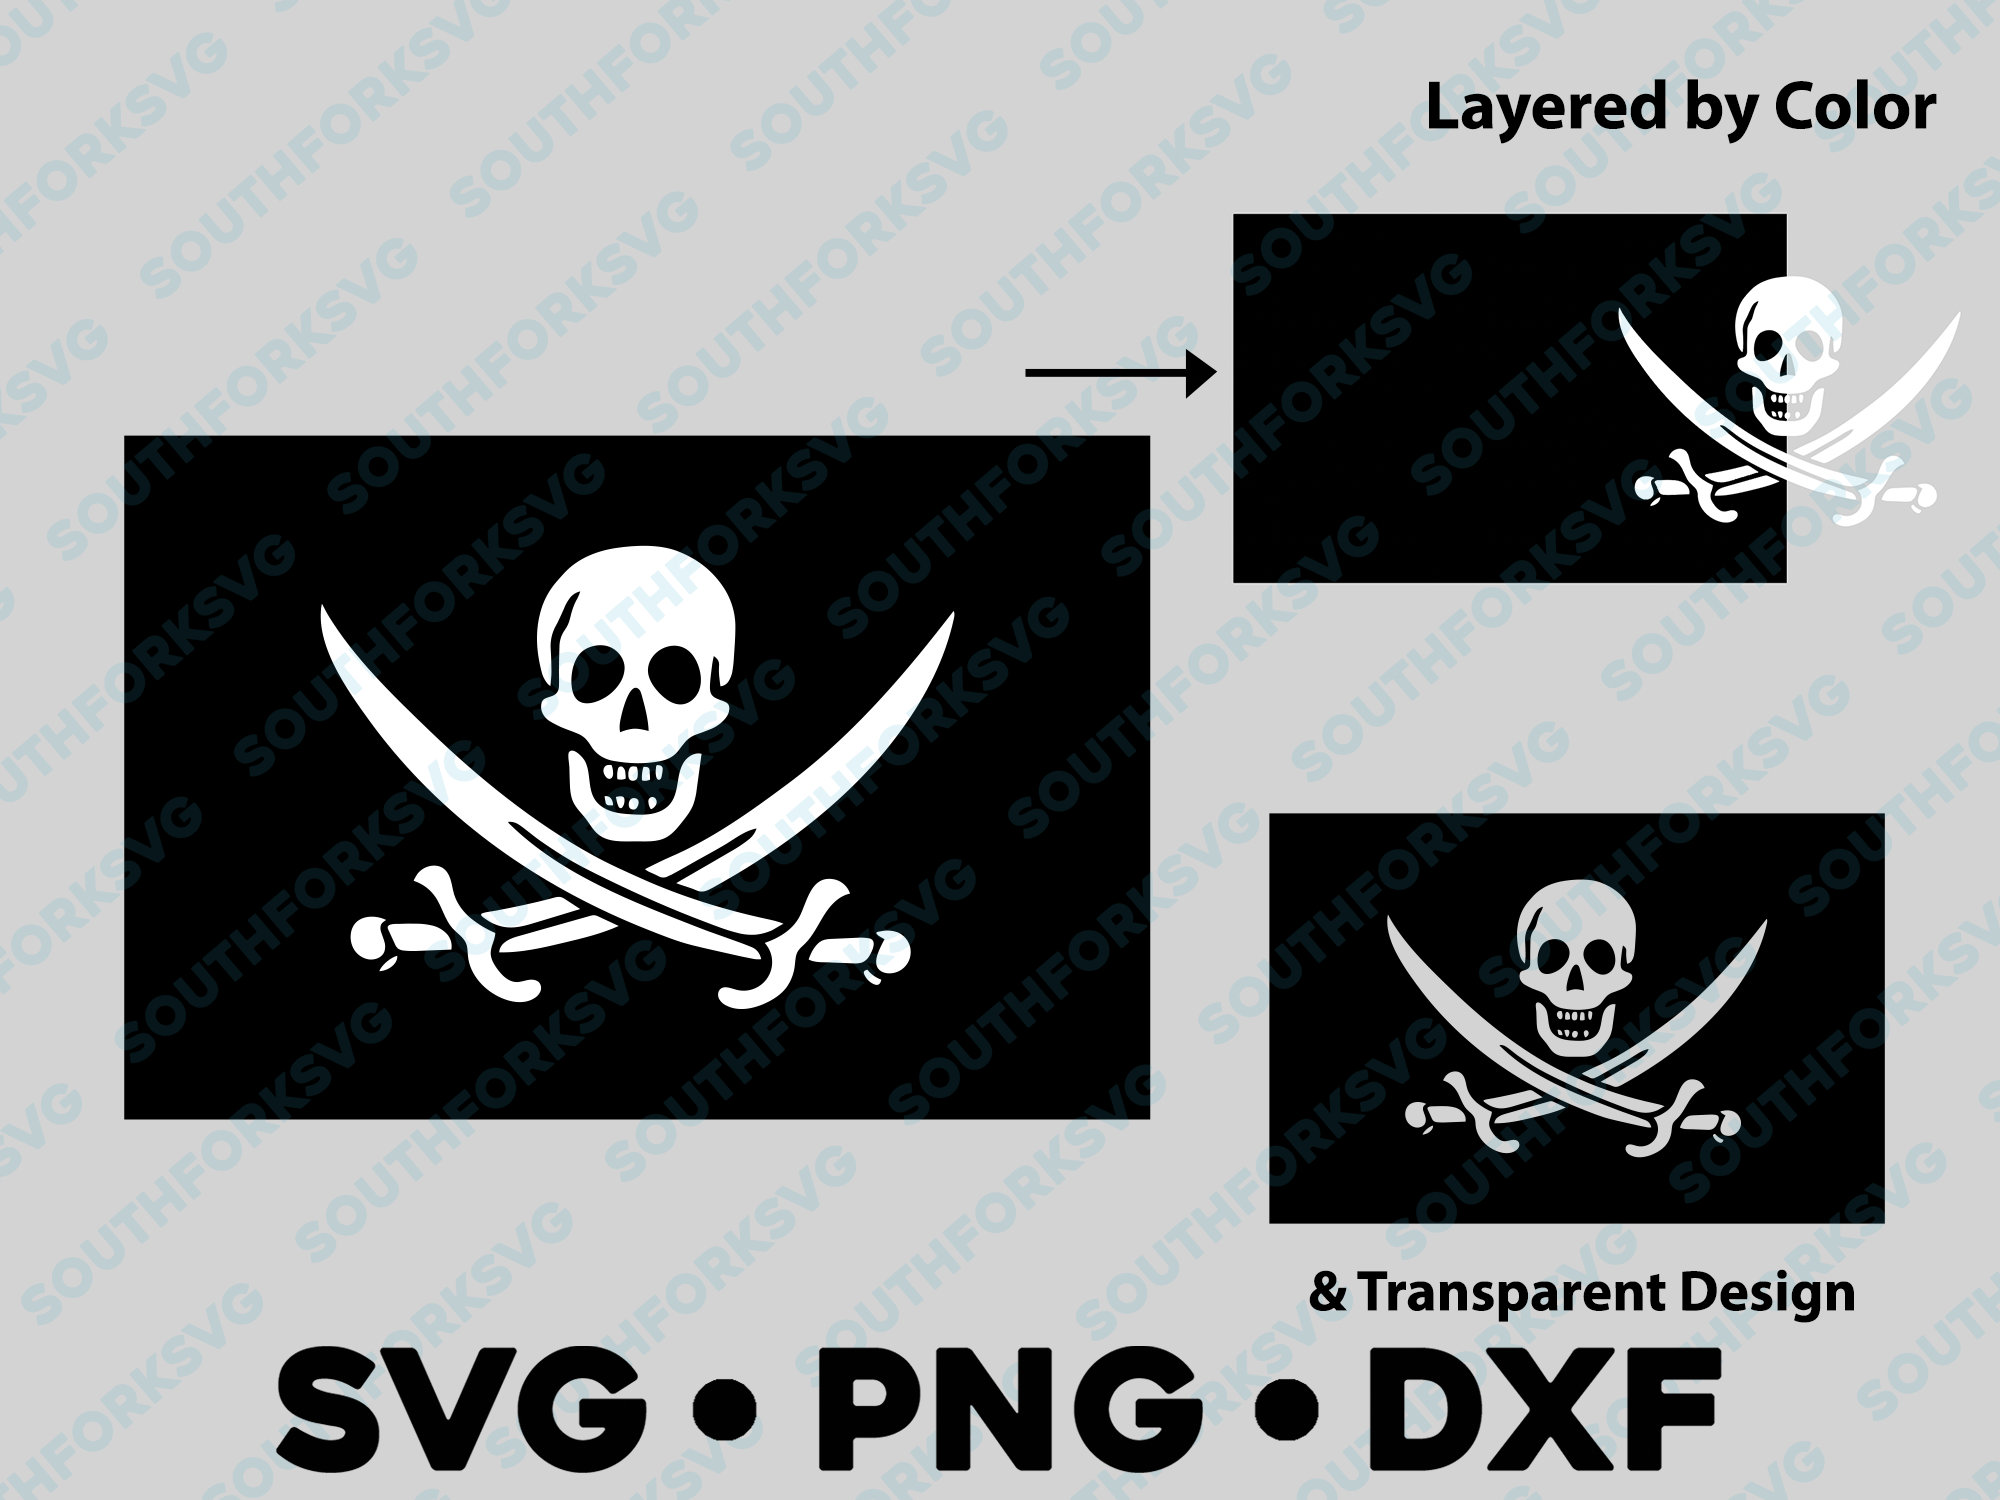 Jolly Roger Piraten Flagge SVG PNG Download druckbare Vektorgrafik  Bügelbild Clipart Jack Rackham Schädel Schwerter Piratenschiff Flagge  Cricut Cut